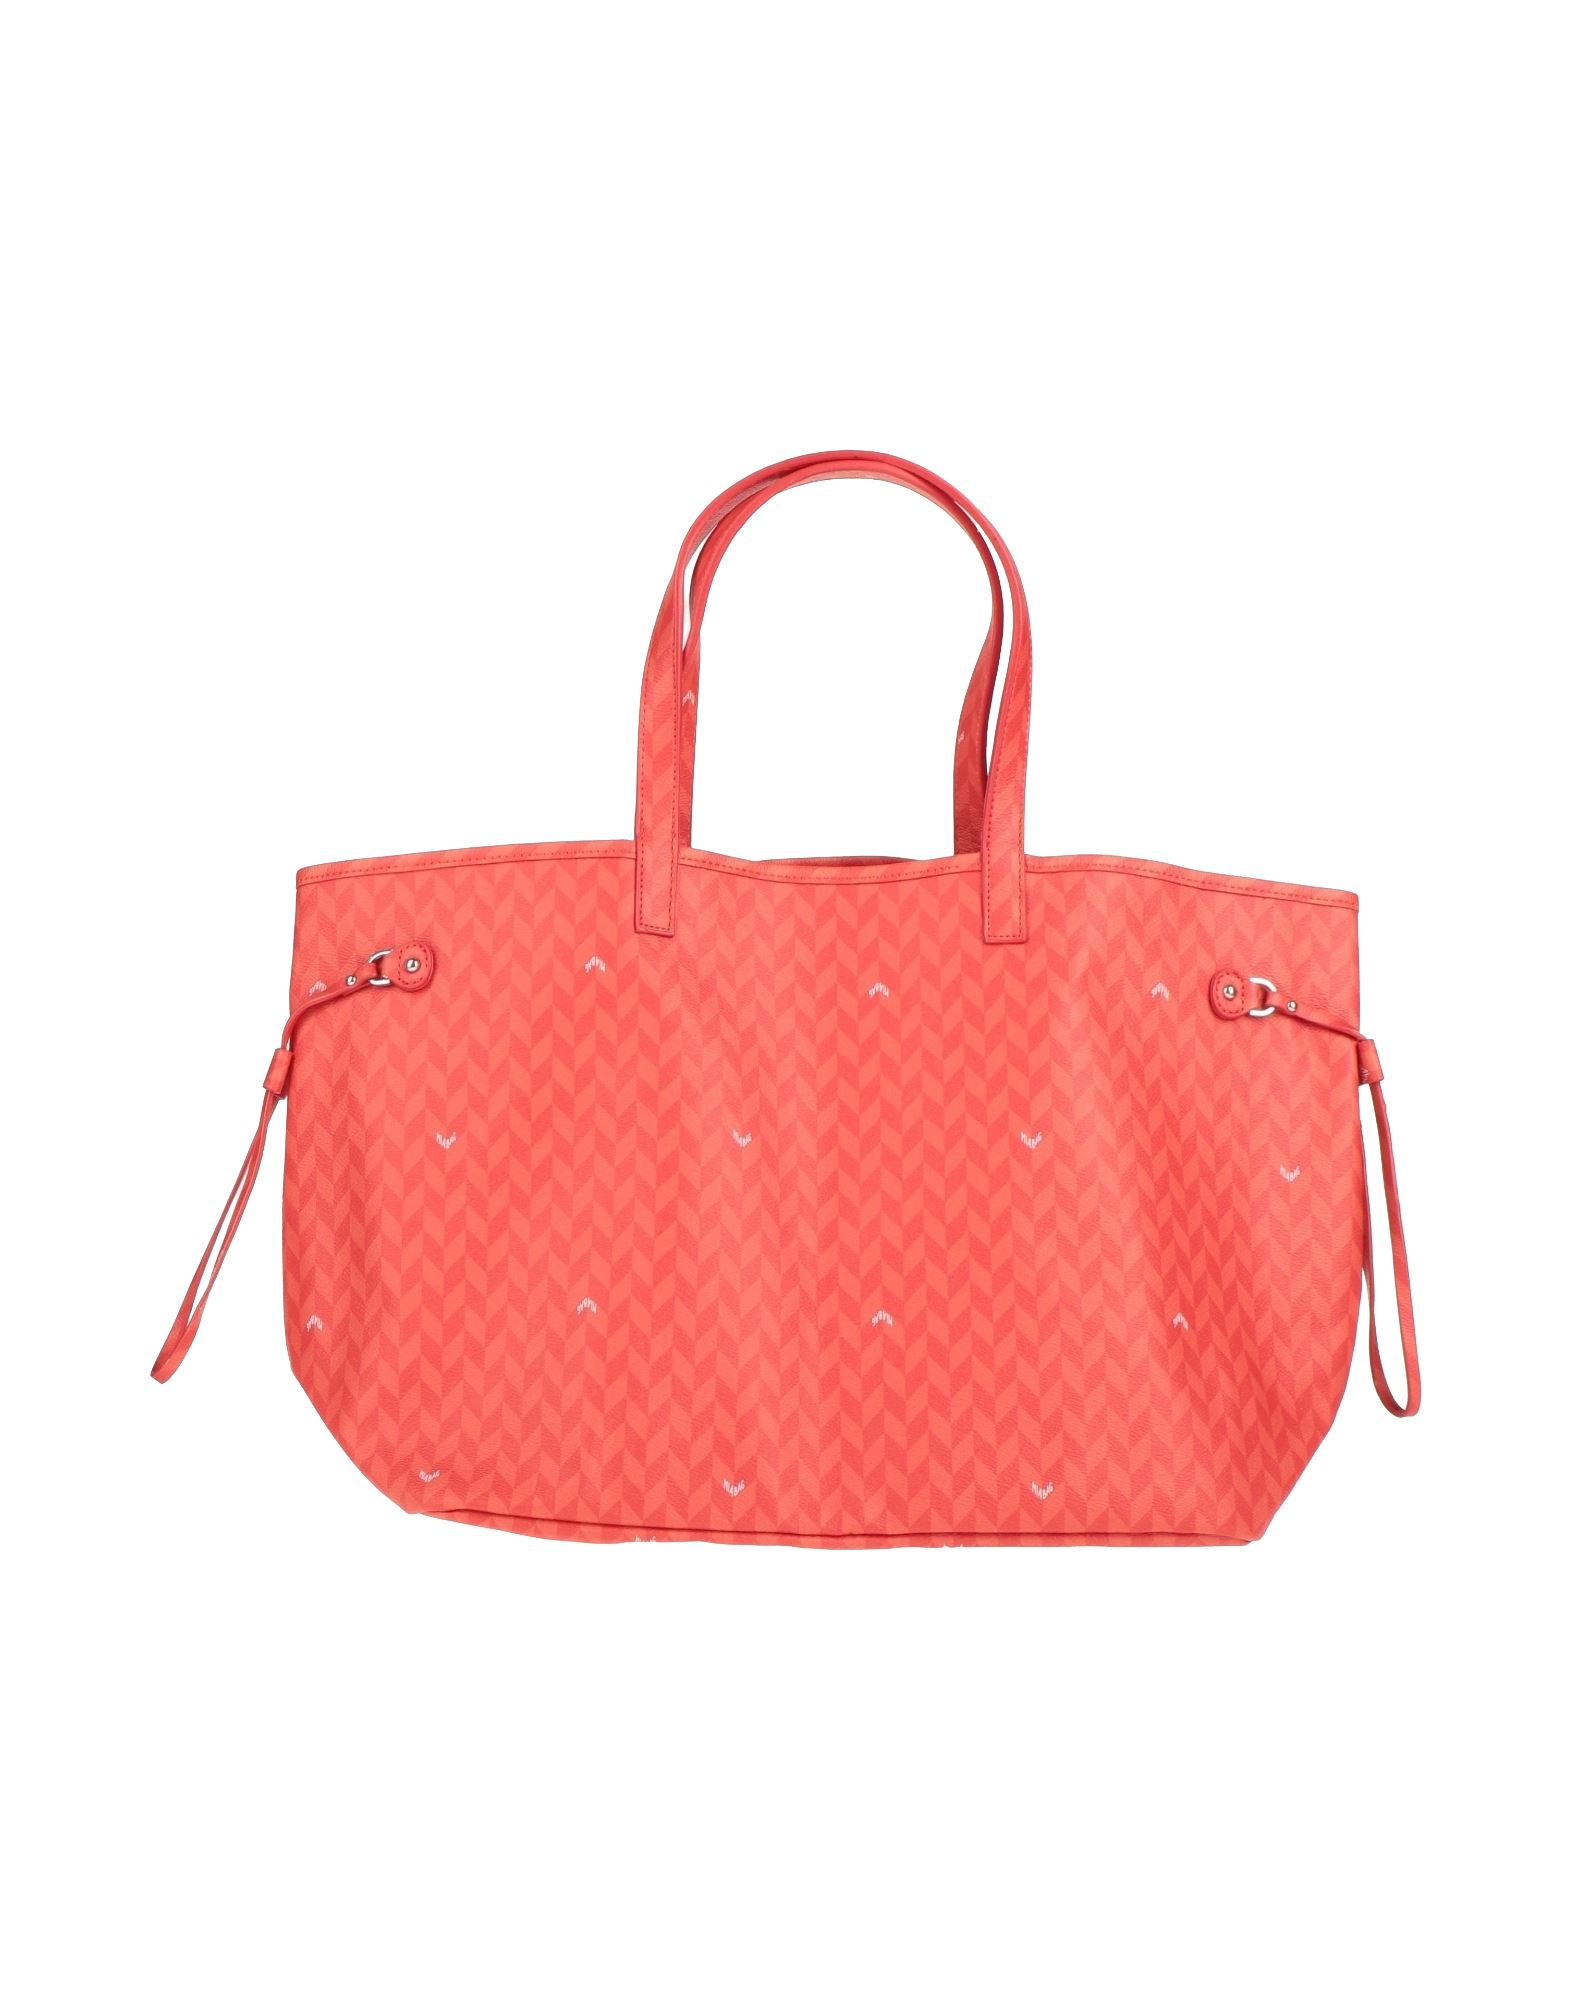 Mia Bag Handbags In Red